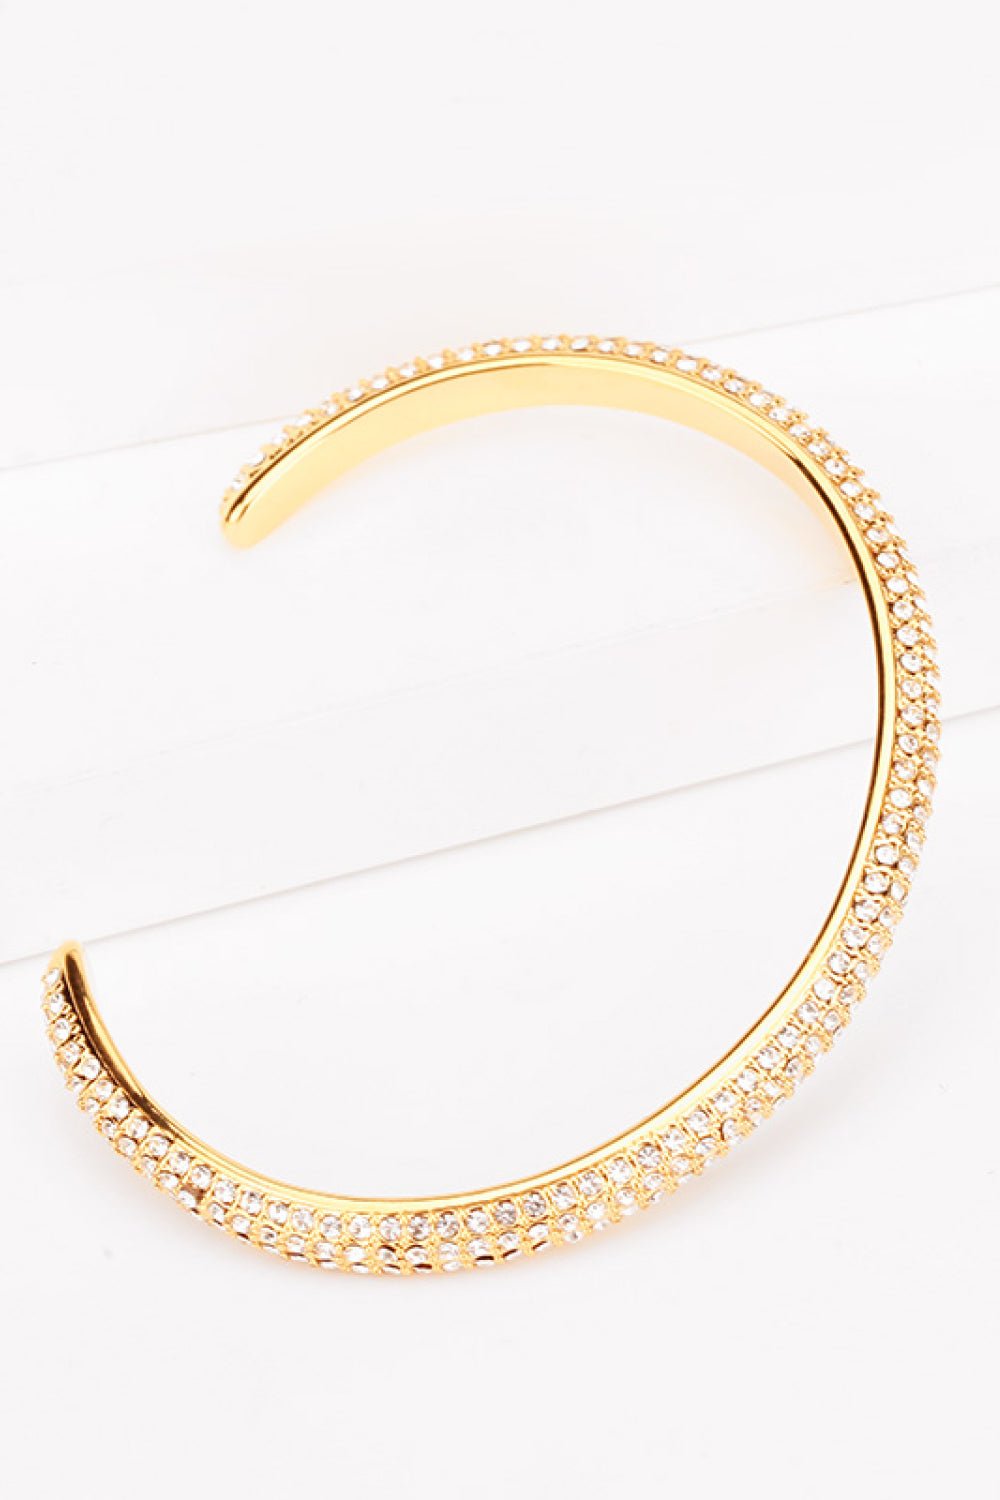 18K Gold-Plated Rhinestone Open Bracelet - PINKCOLADA-Bracelets-100100603659884